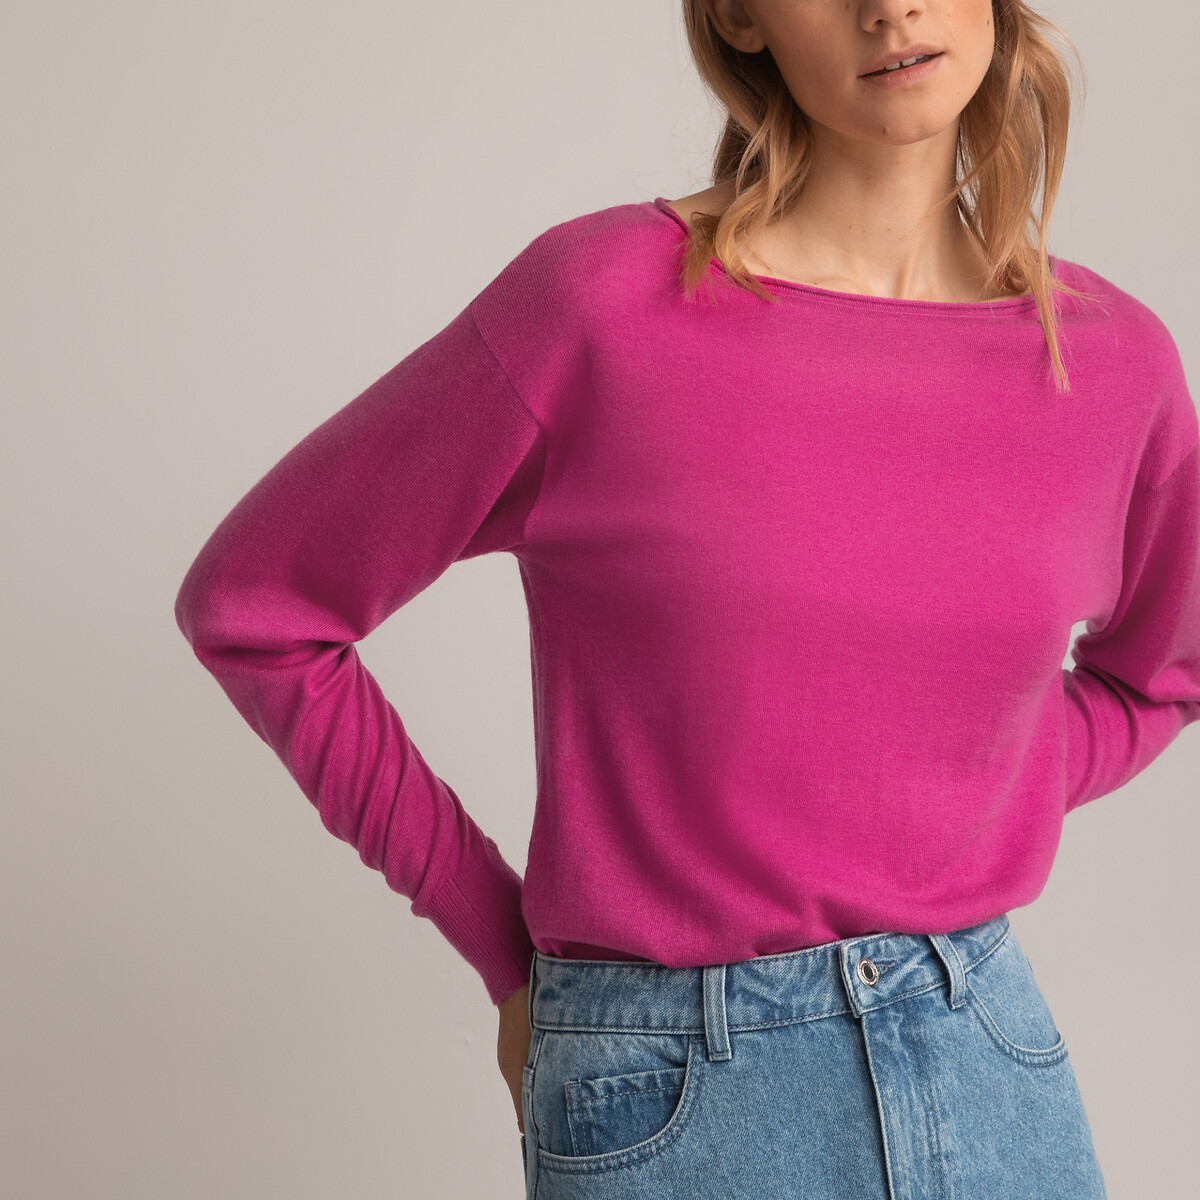 Пуловер С вырезом-лодочкой XS розовый LaRedoute, размер XS - фото 1